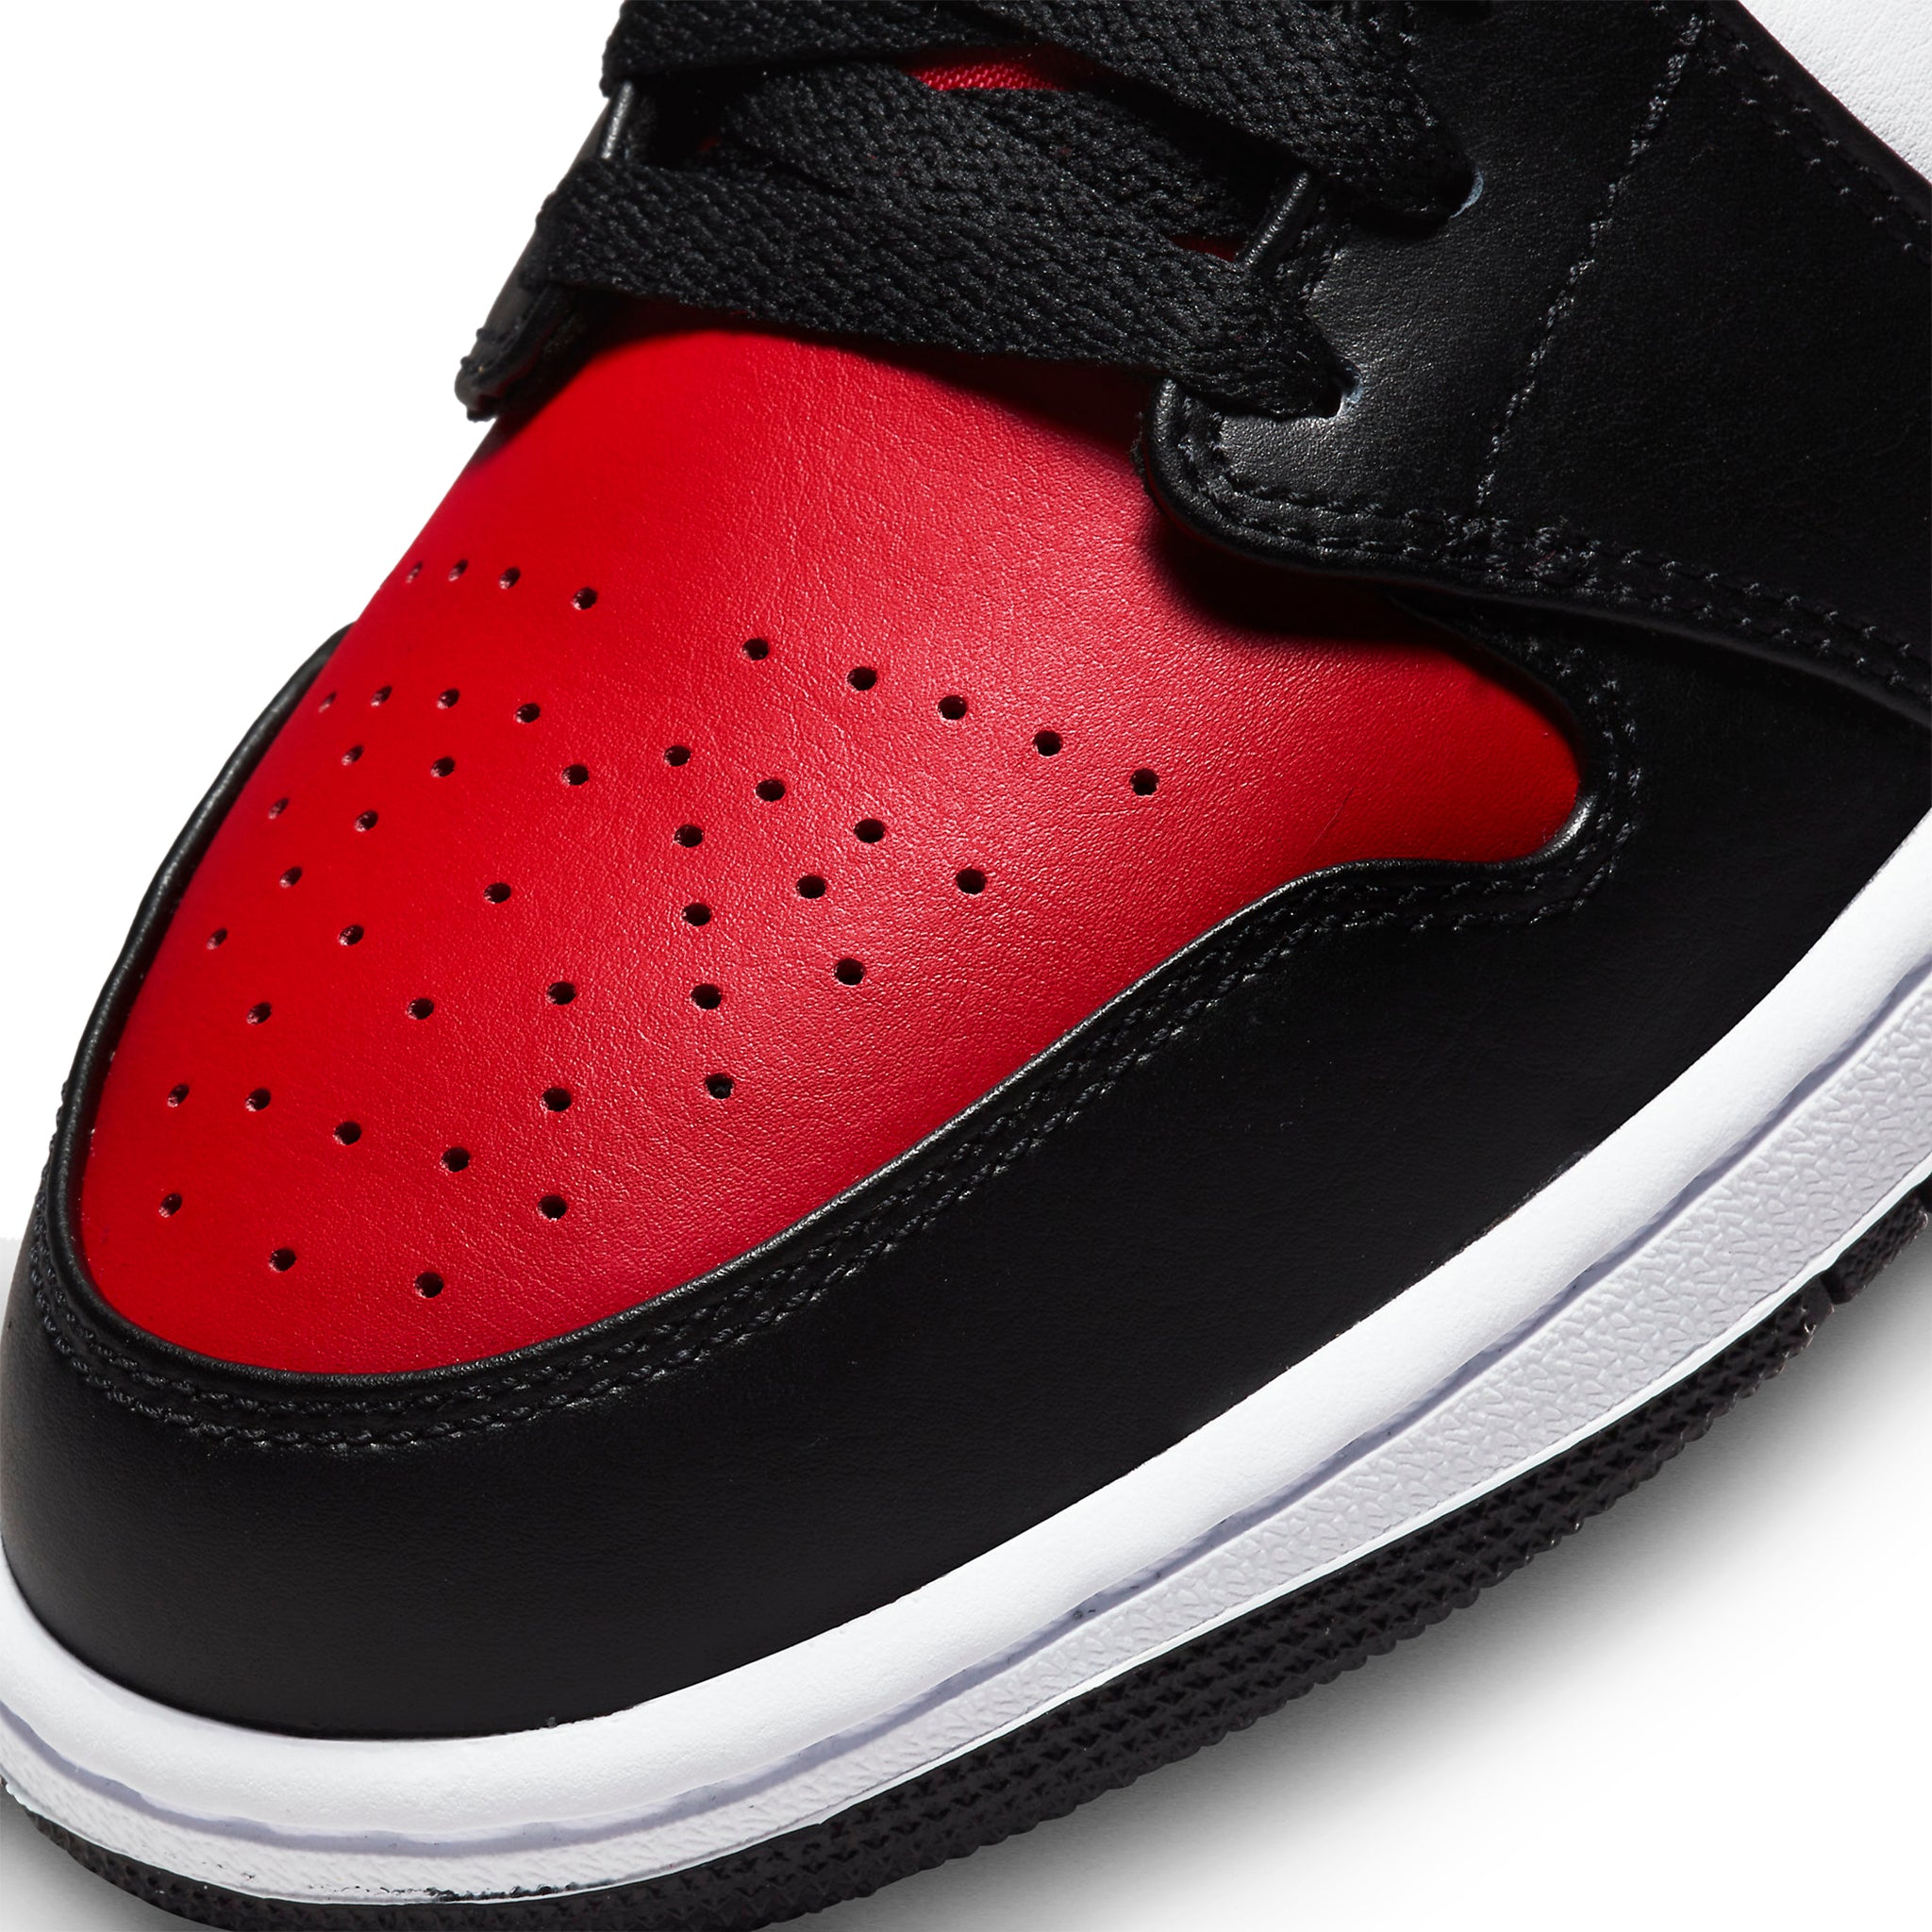 Toe box view of Air Jordan 1 Mid White Black Red (2022) 554724-079